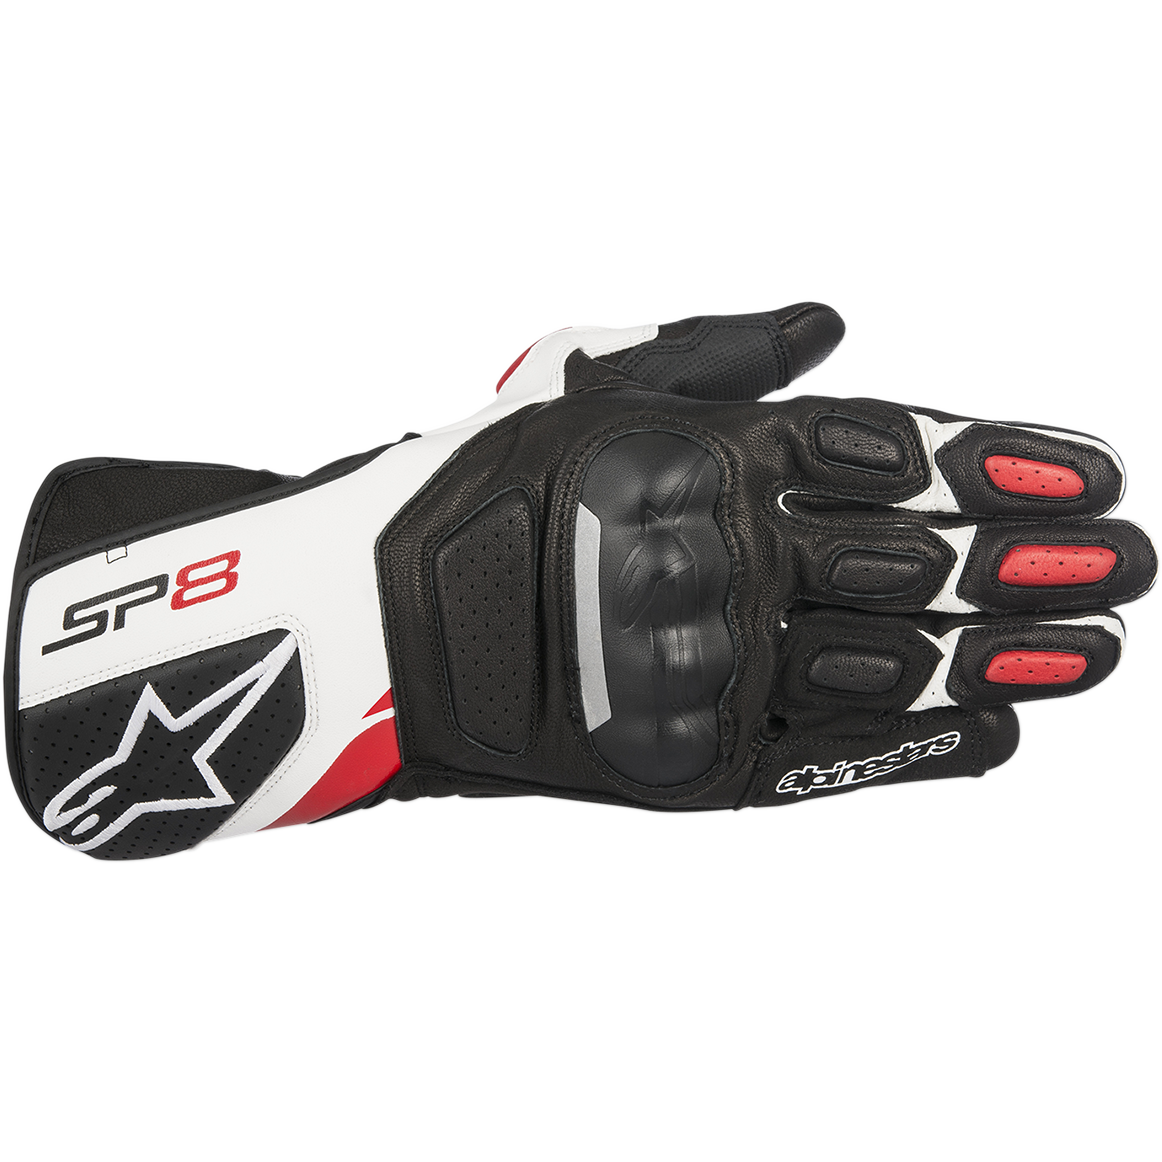 SP-8 V2 Gloves